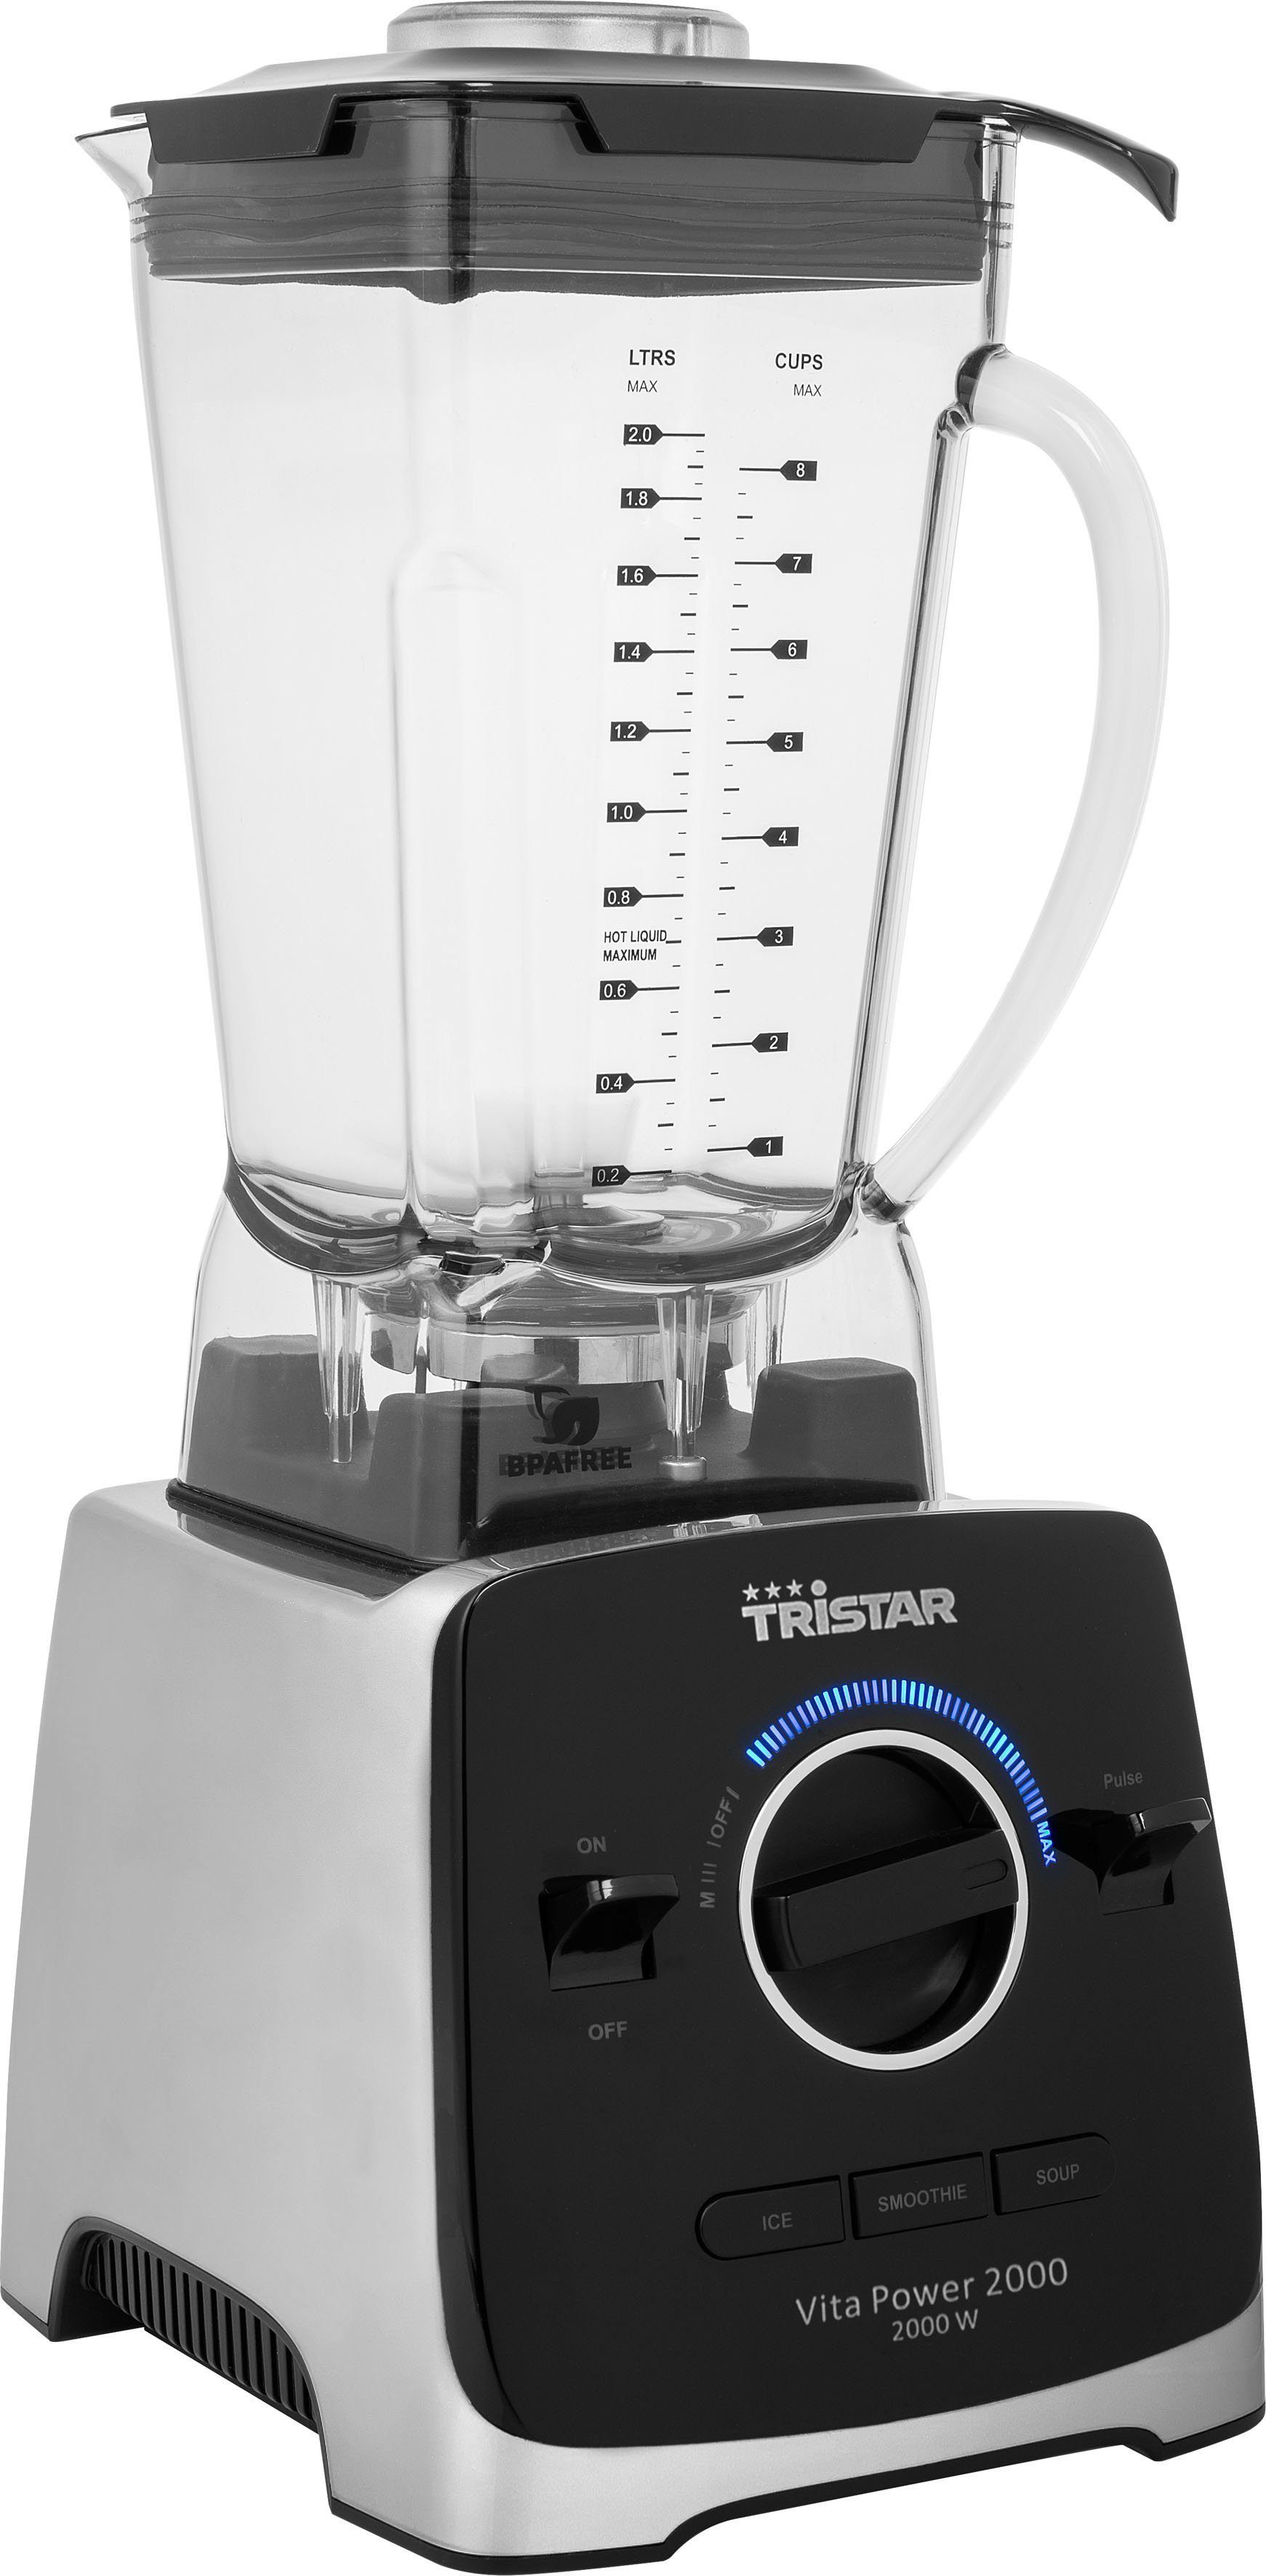 Tritan-Mixbehälter 2L Blender W, Standmixer BL4473 VitaPower 2000 2000, Tristar